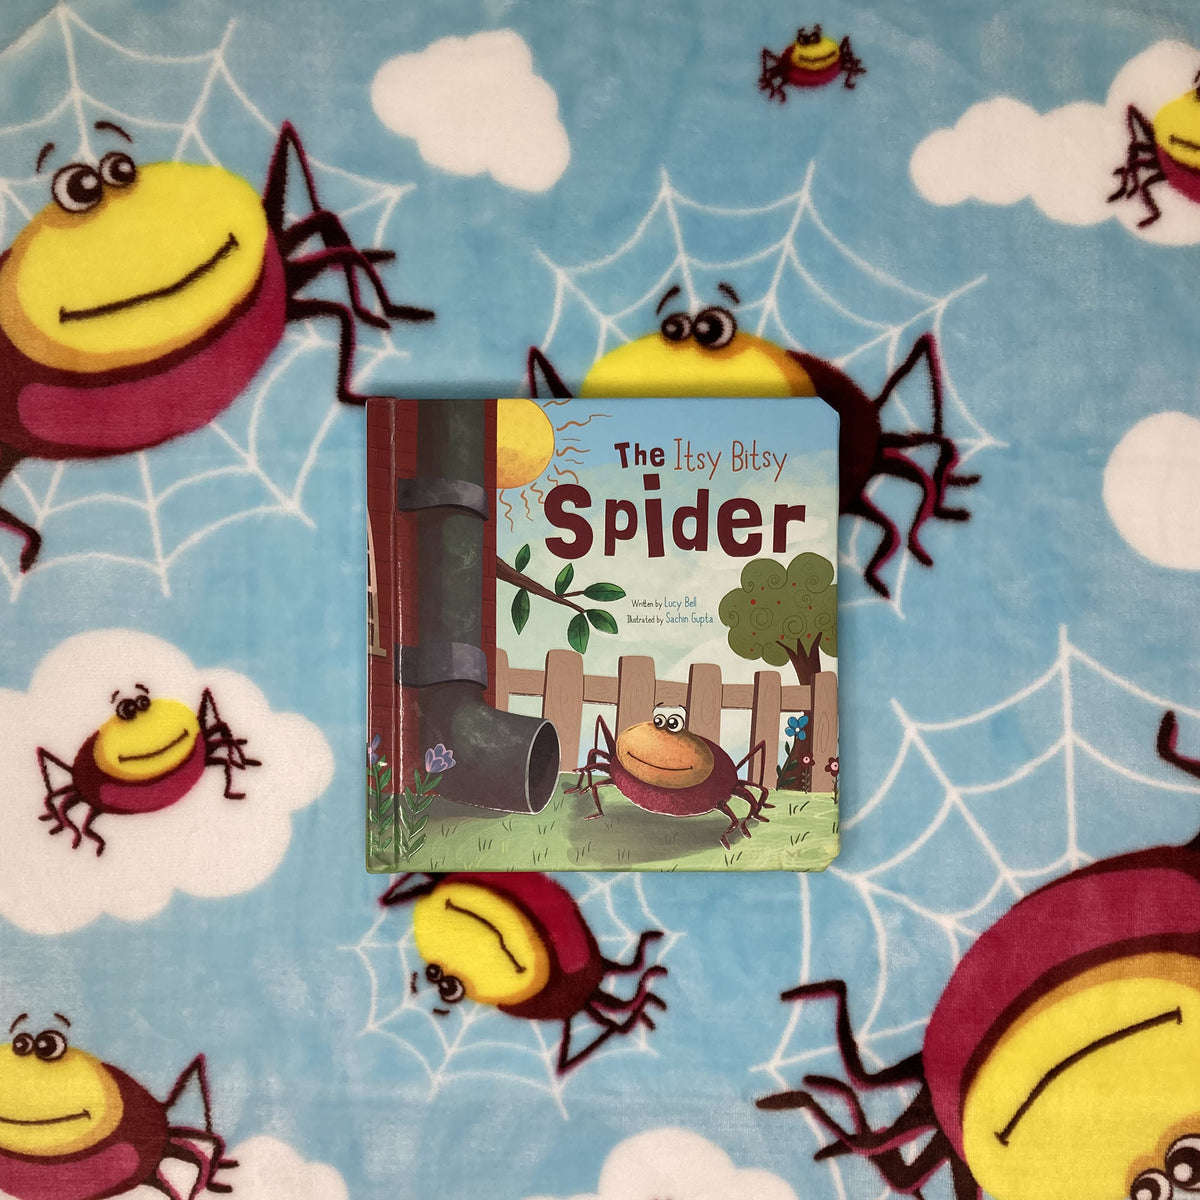 itsy bitsy spider - Binks &amp; Books Blanket and Book Gift Set